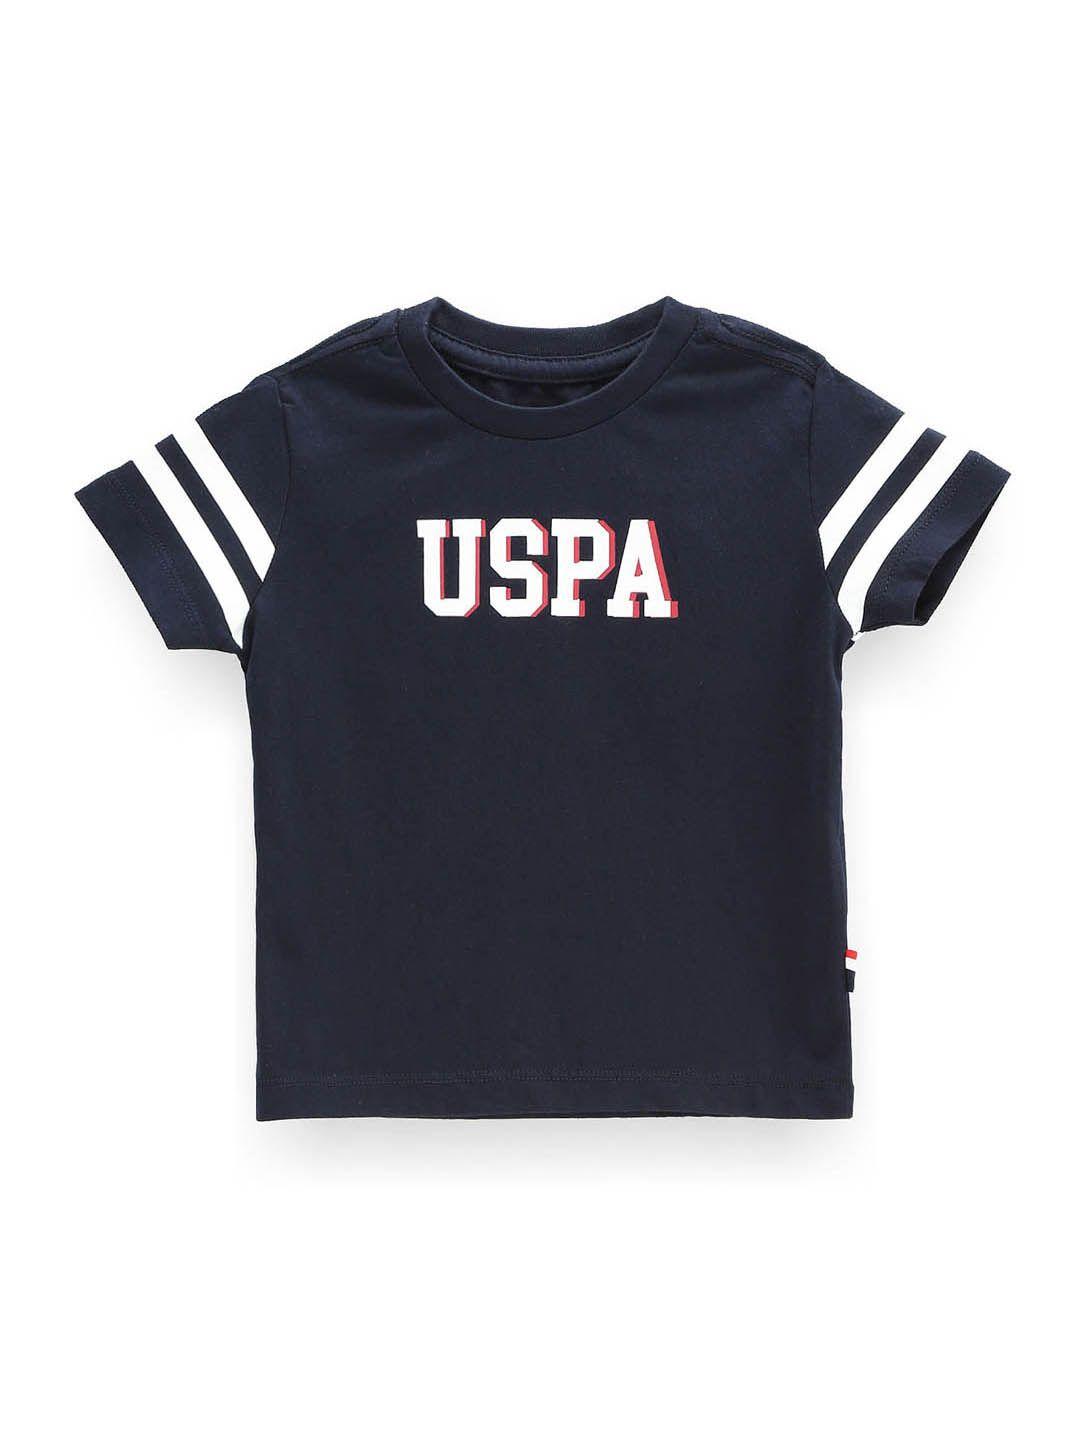 U.S. Polo Assn. Kids Boys Typography Printed Pure Cotton T-shirt